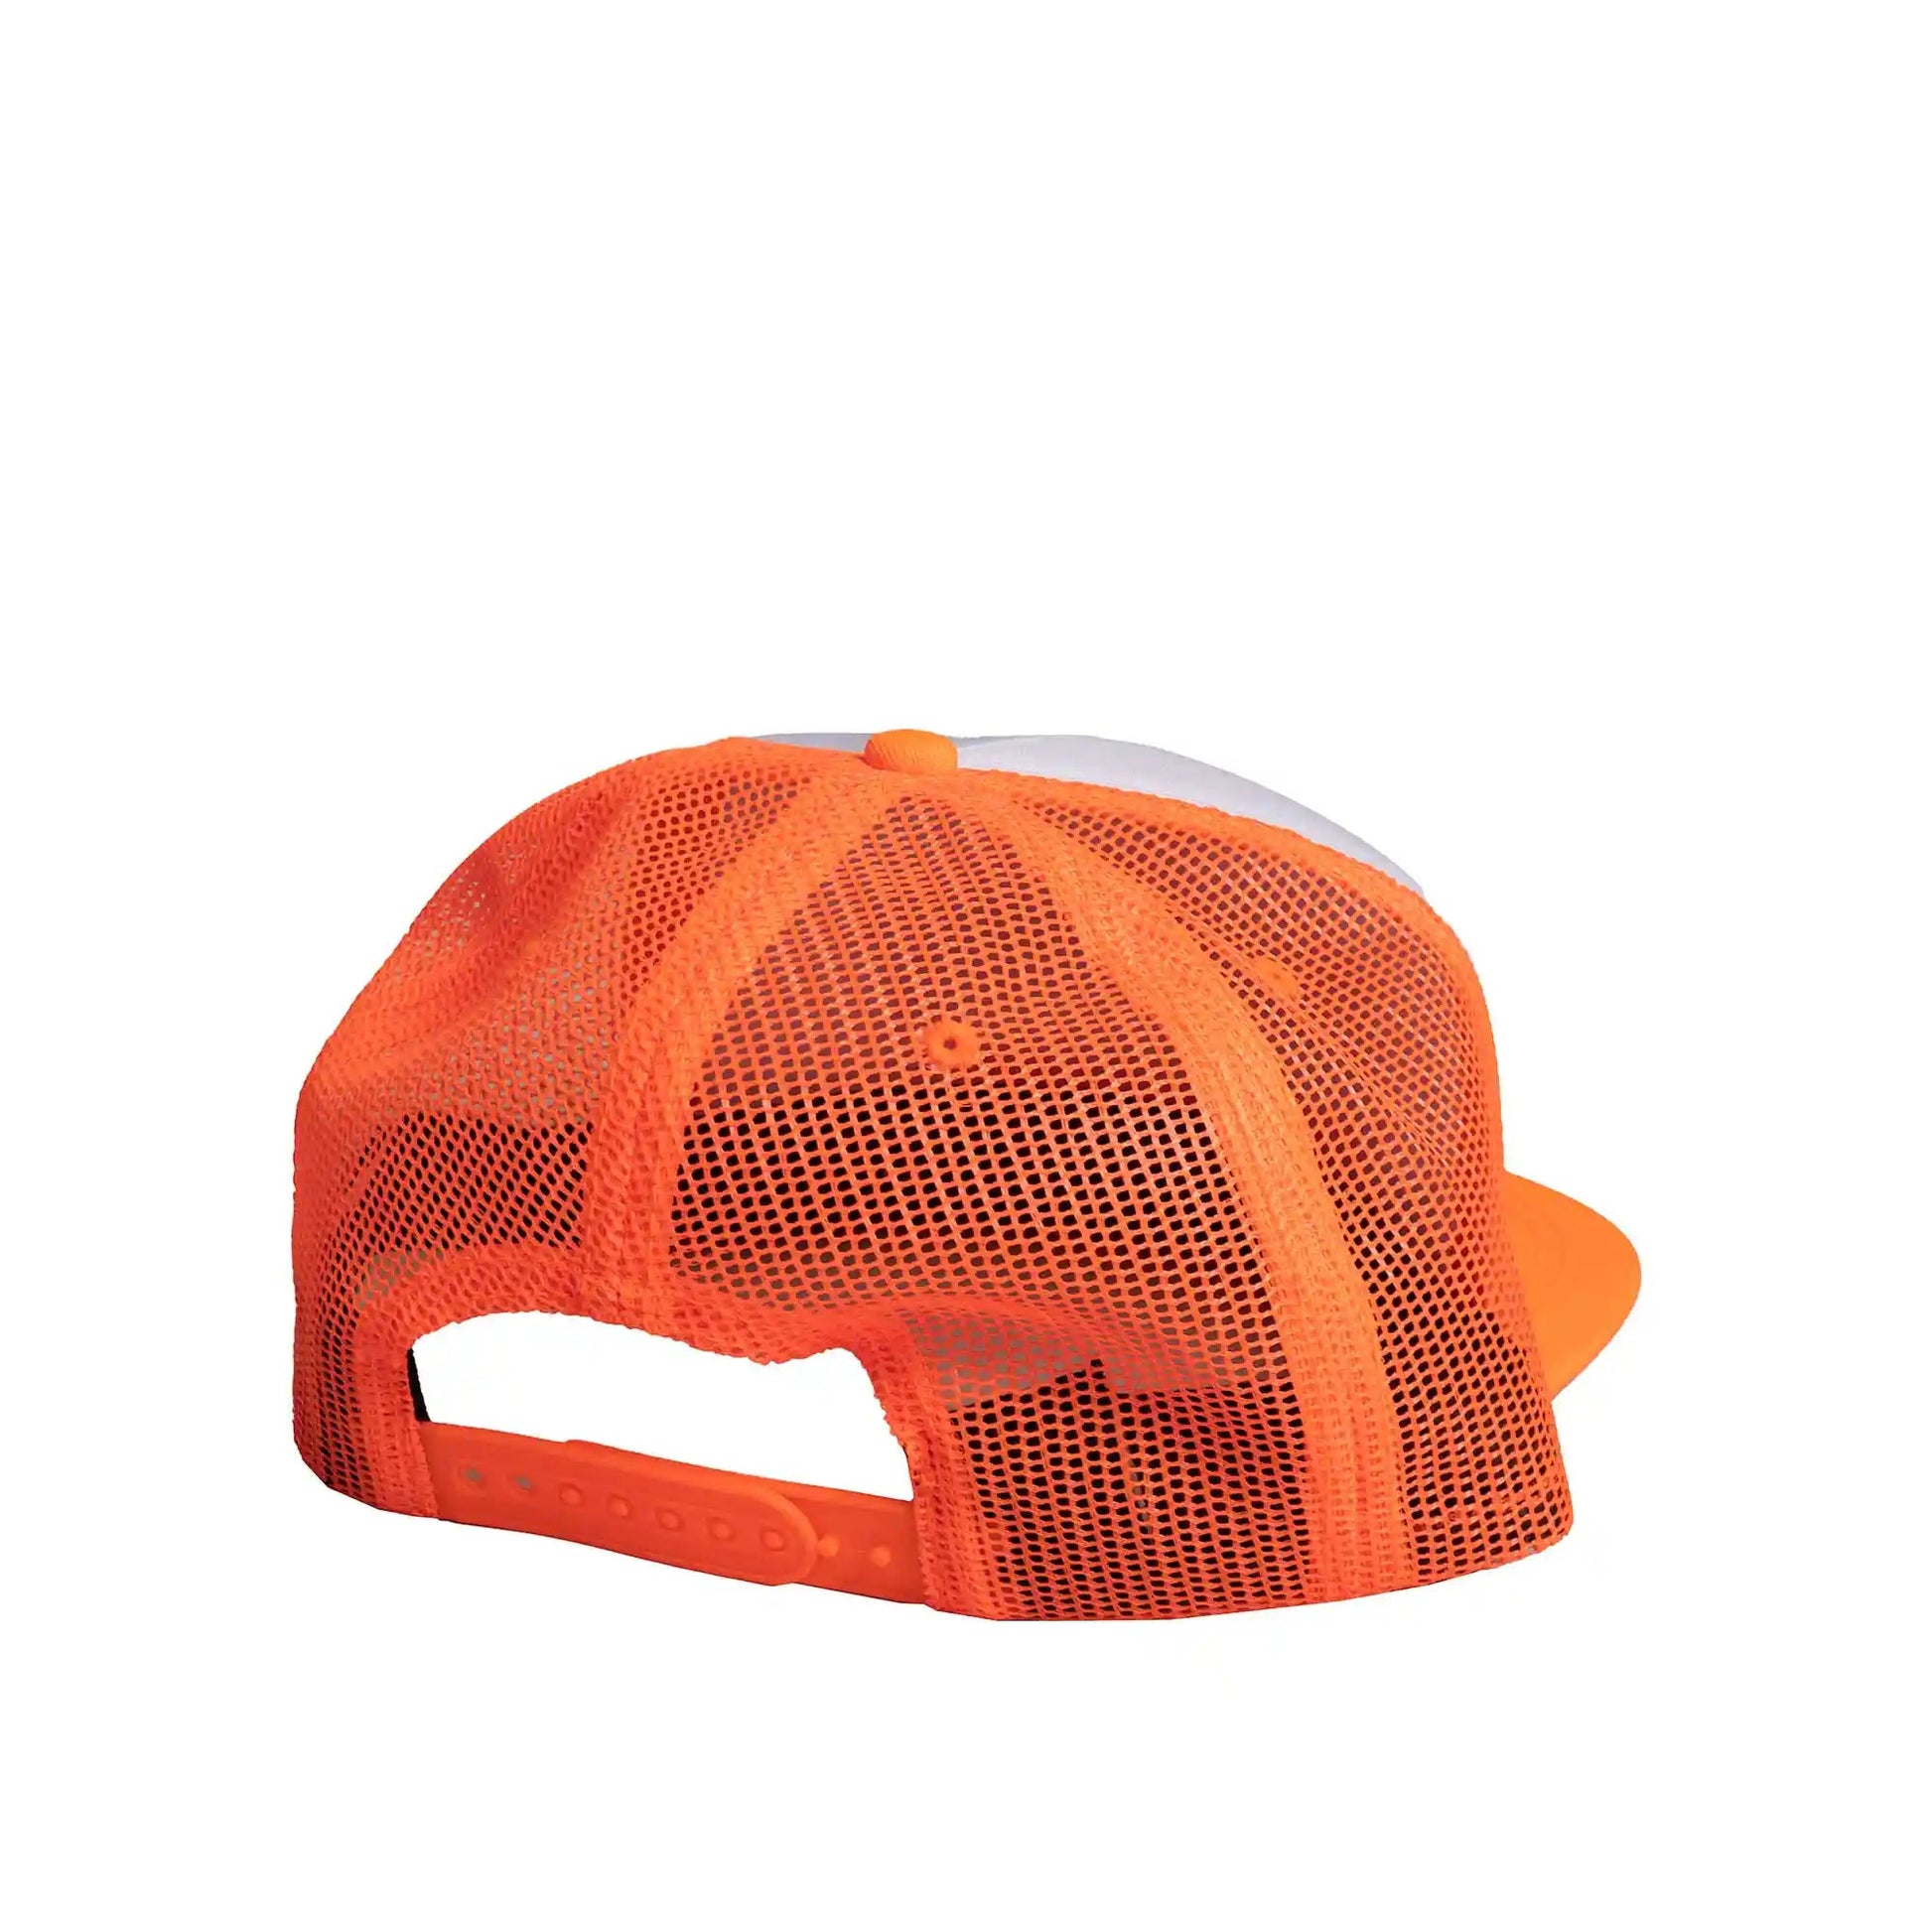 Thrasher Ellipse Logo Trucker Rope Hat, orange - Tiki Room Skateboards - 2